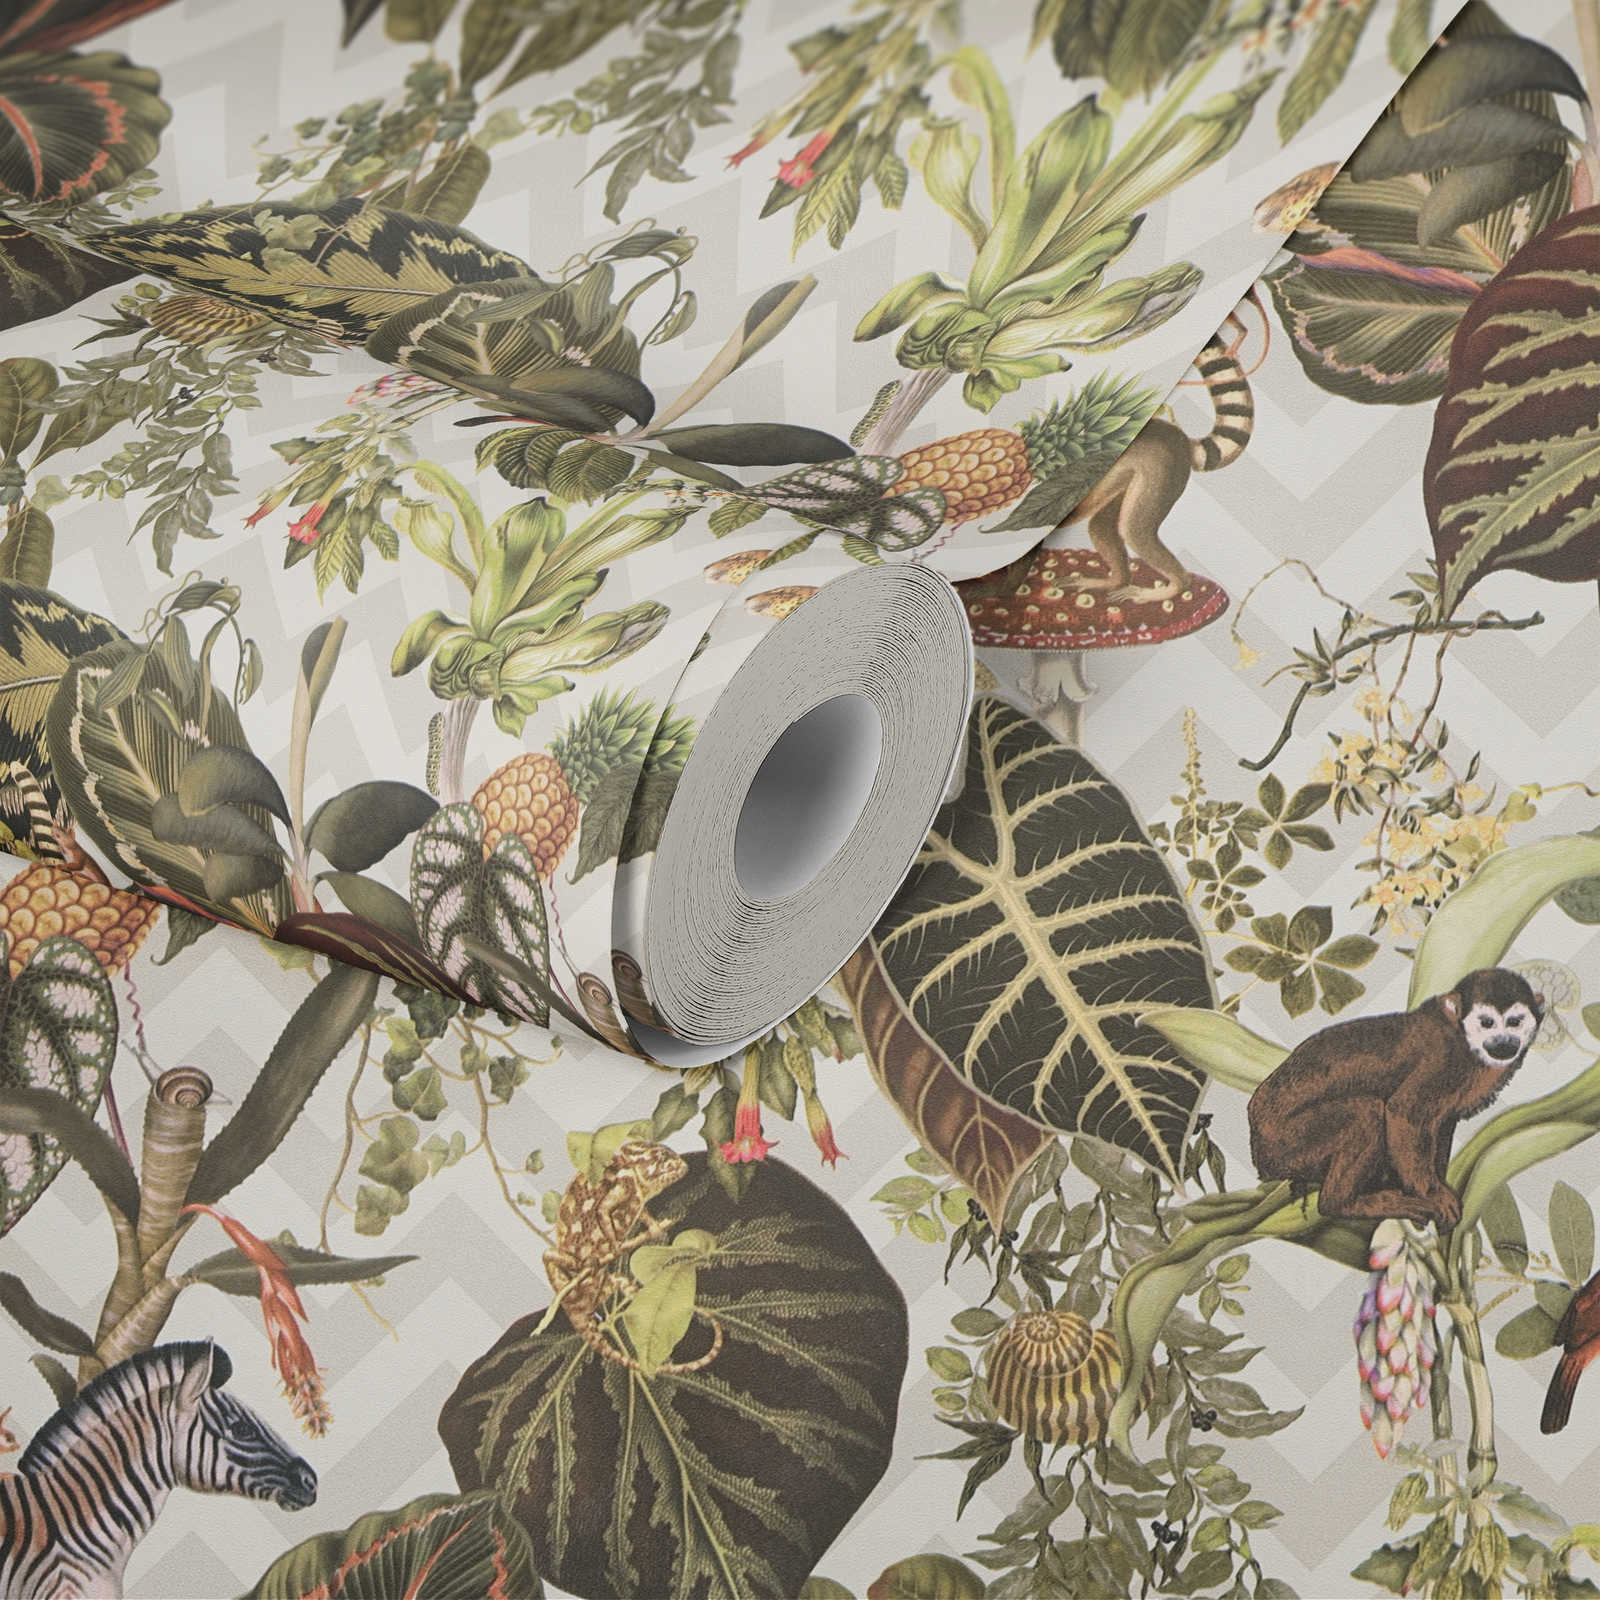             Designer wallpaper MICHALSKY jungle leaves & animals - beige, colourful
        